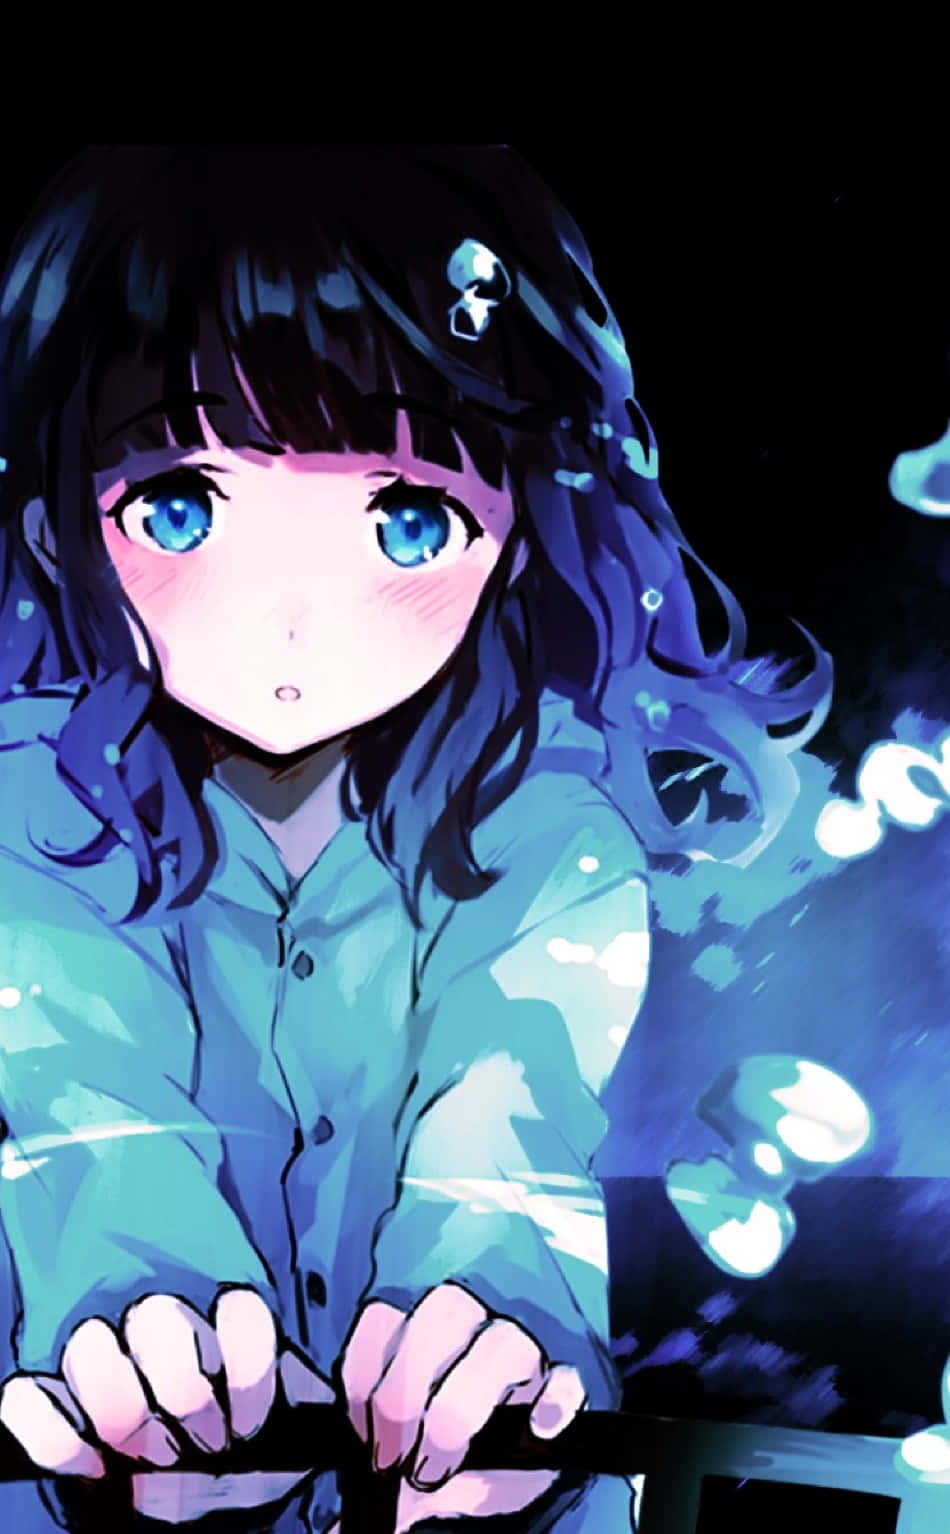 Sad Depressing Anime Girl Falling Tears